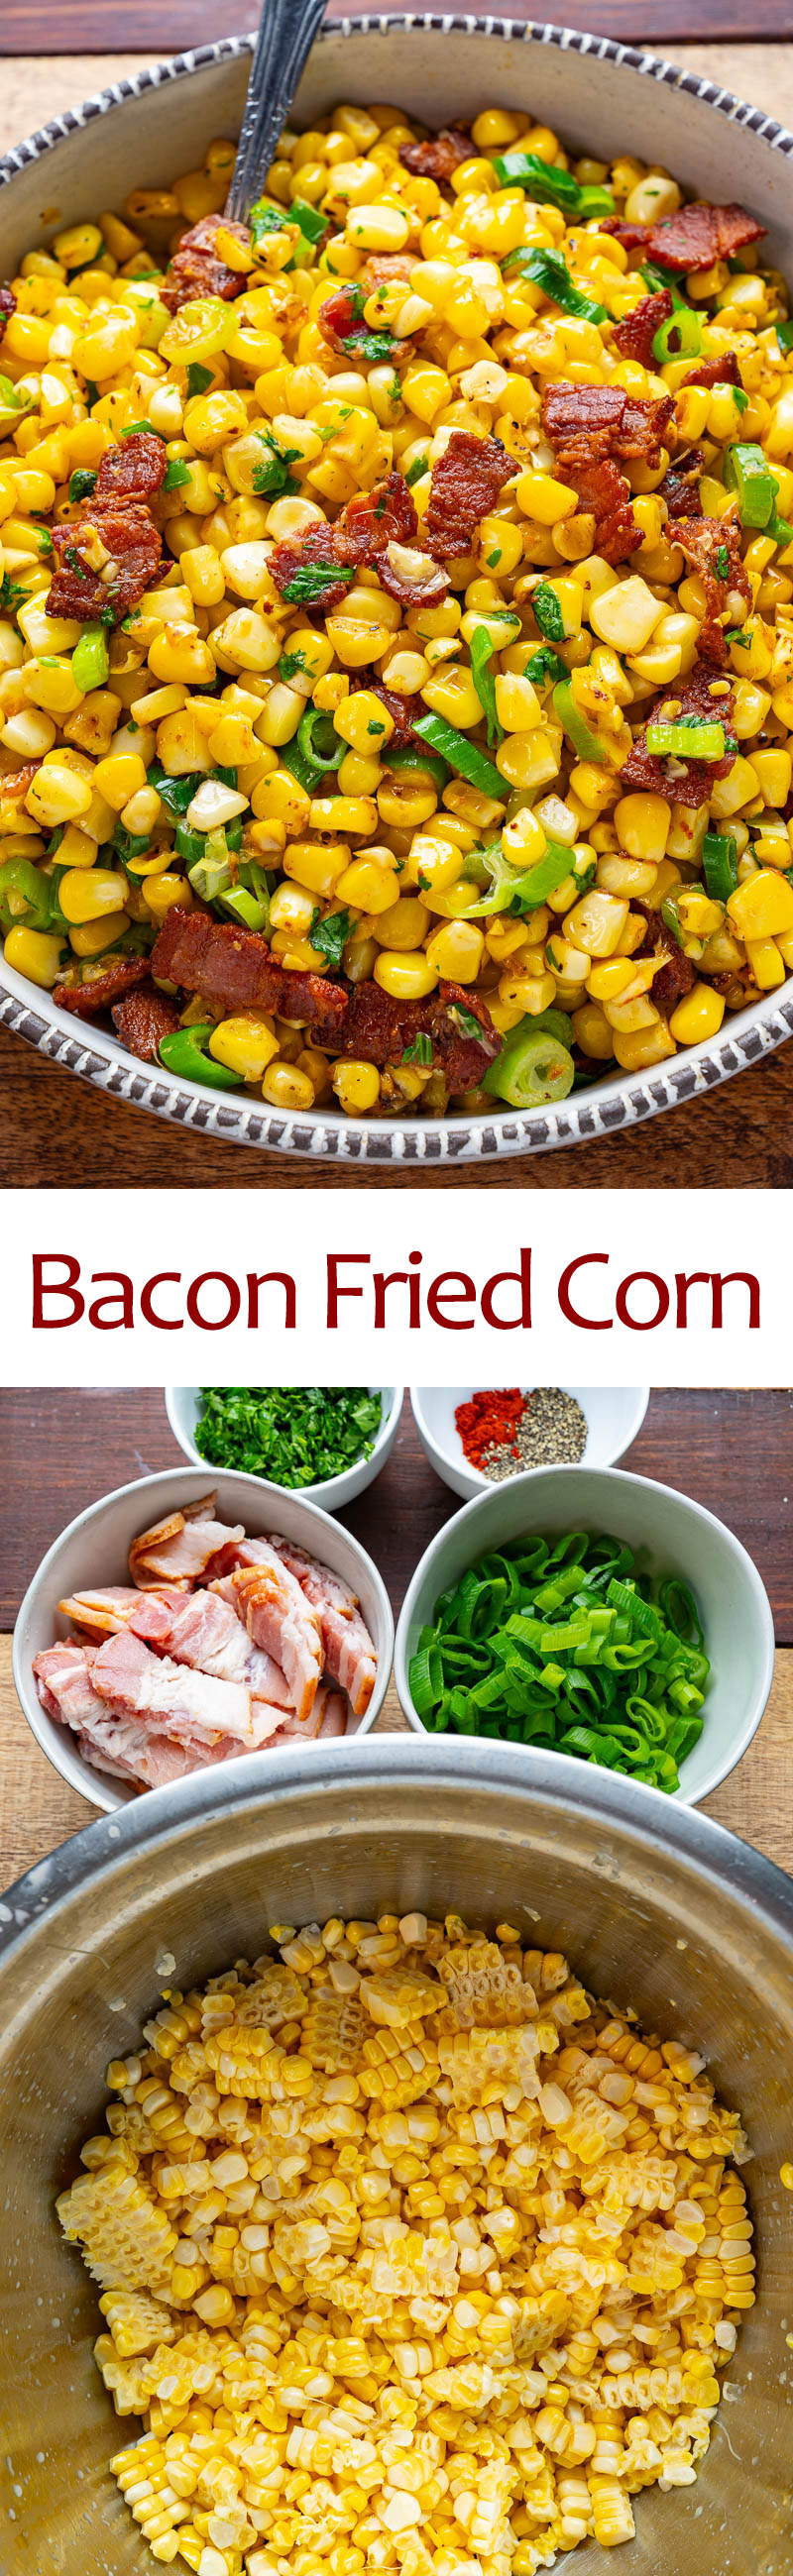 Bacon Fried Corn